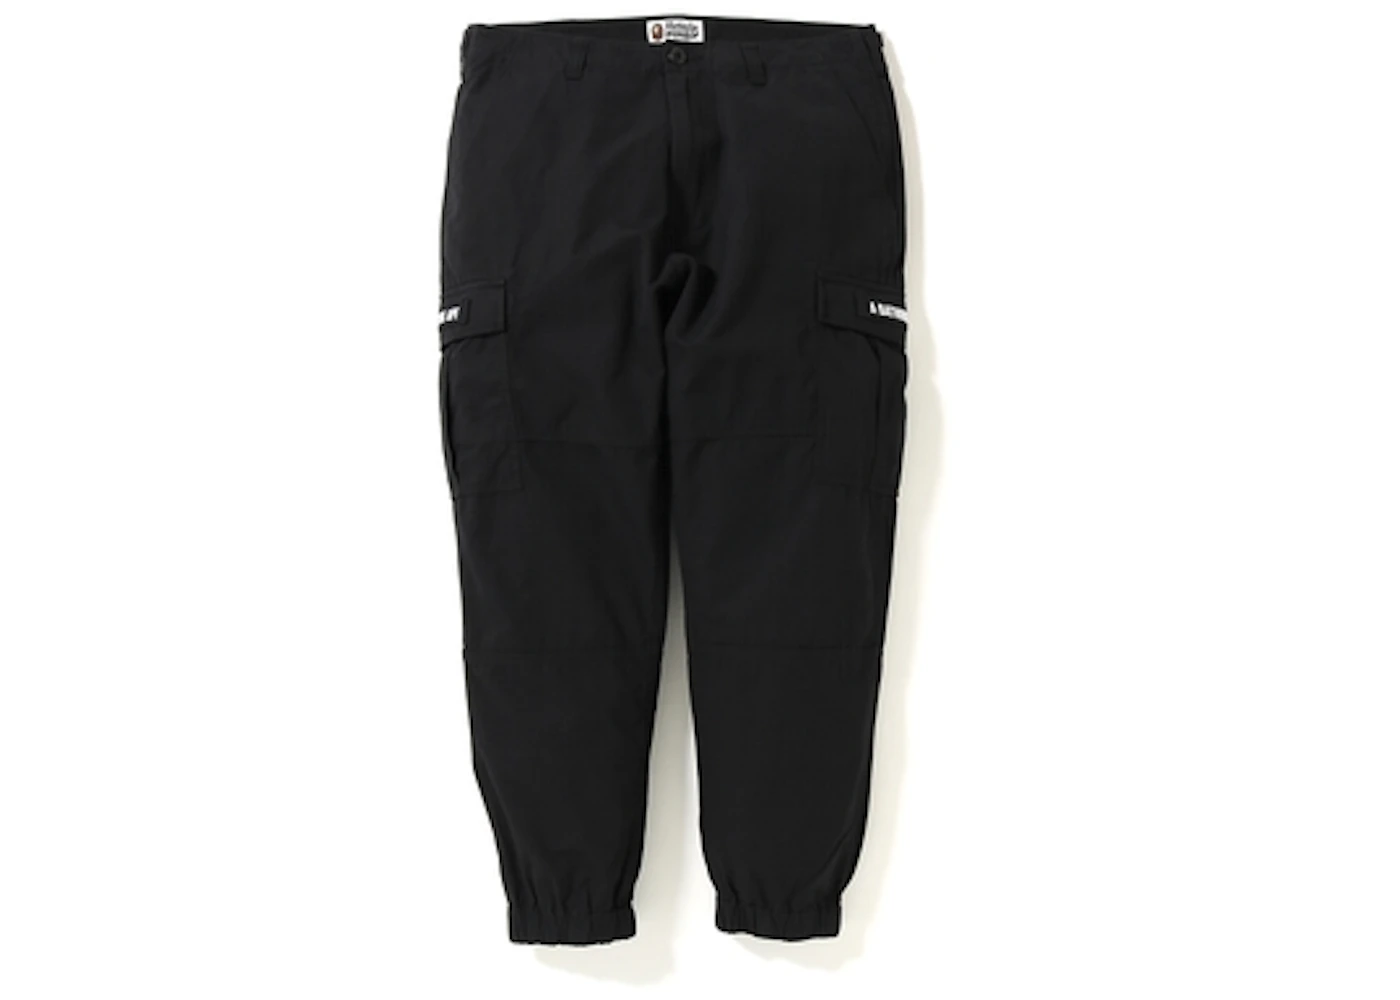 BAPE Slim 6 Pocket Jogger Pants Black Men's - FW18 - US